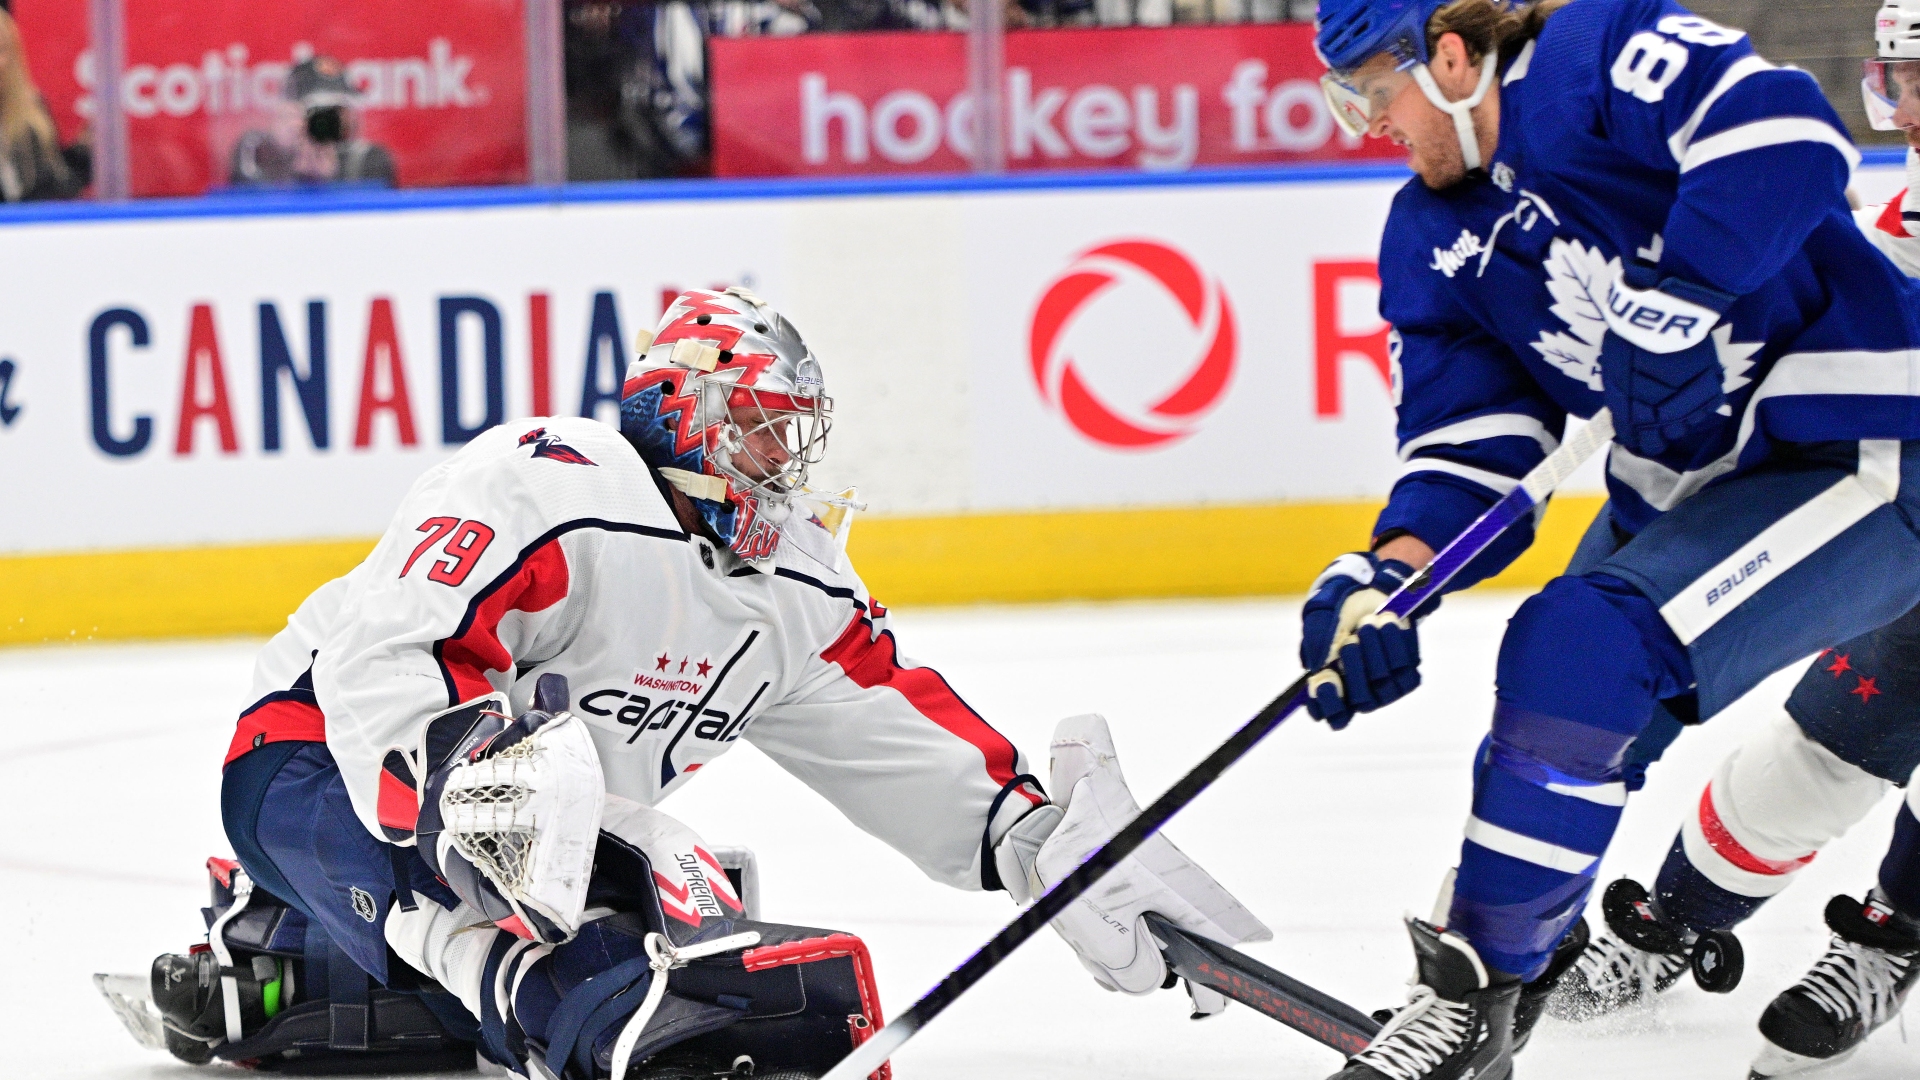 Capitals goalie Charlie Lindgren stops a shot by Maple Leafs forward William Nylander